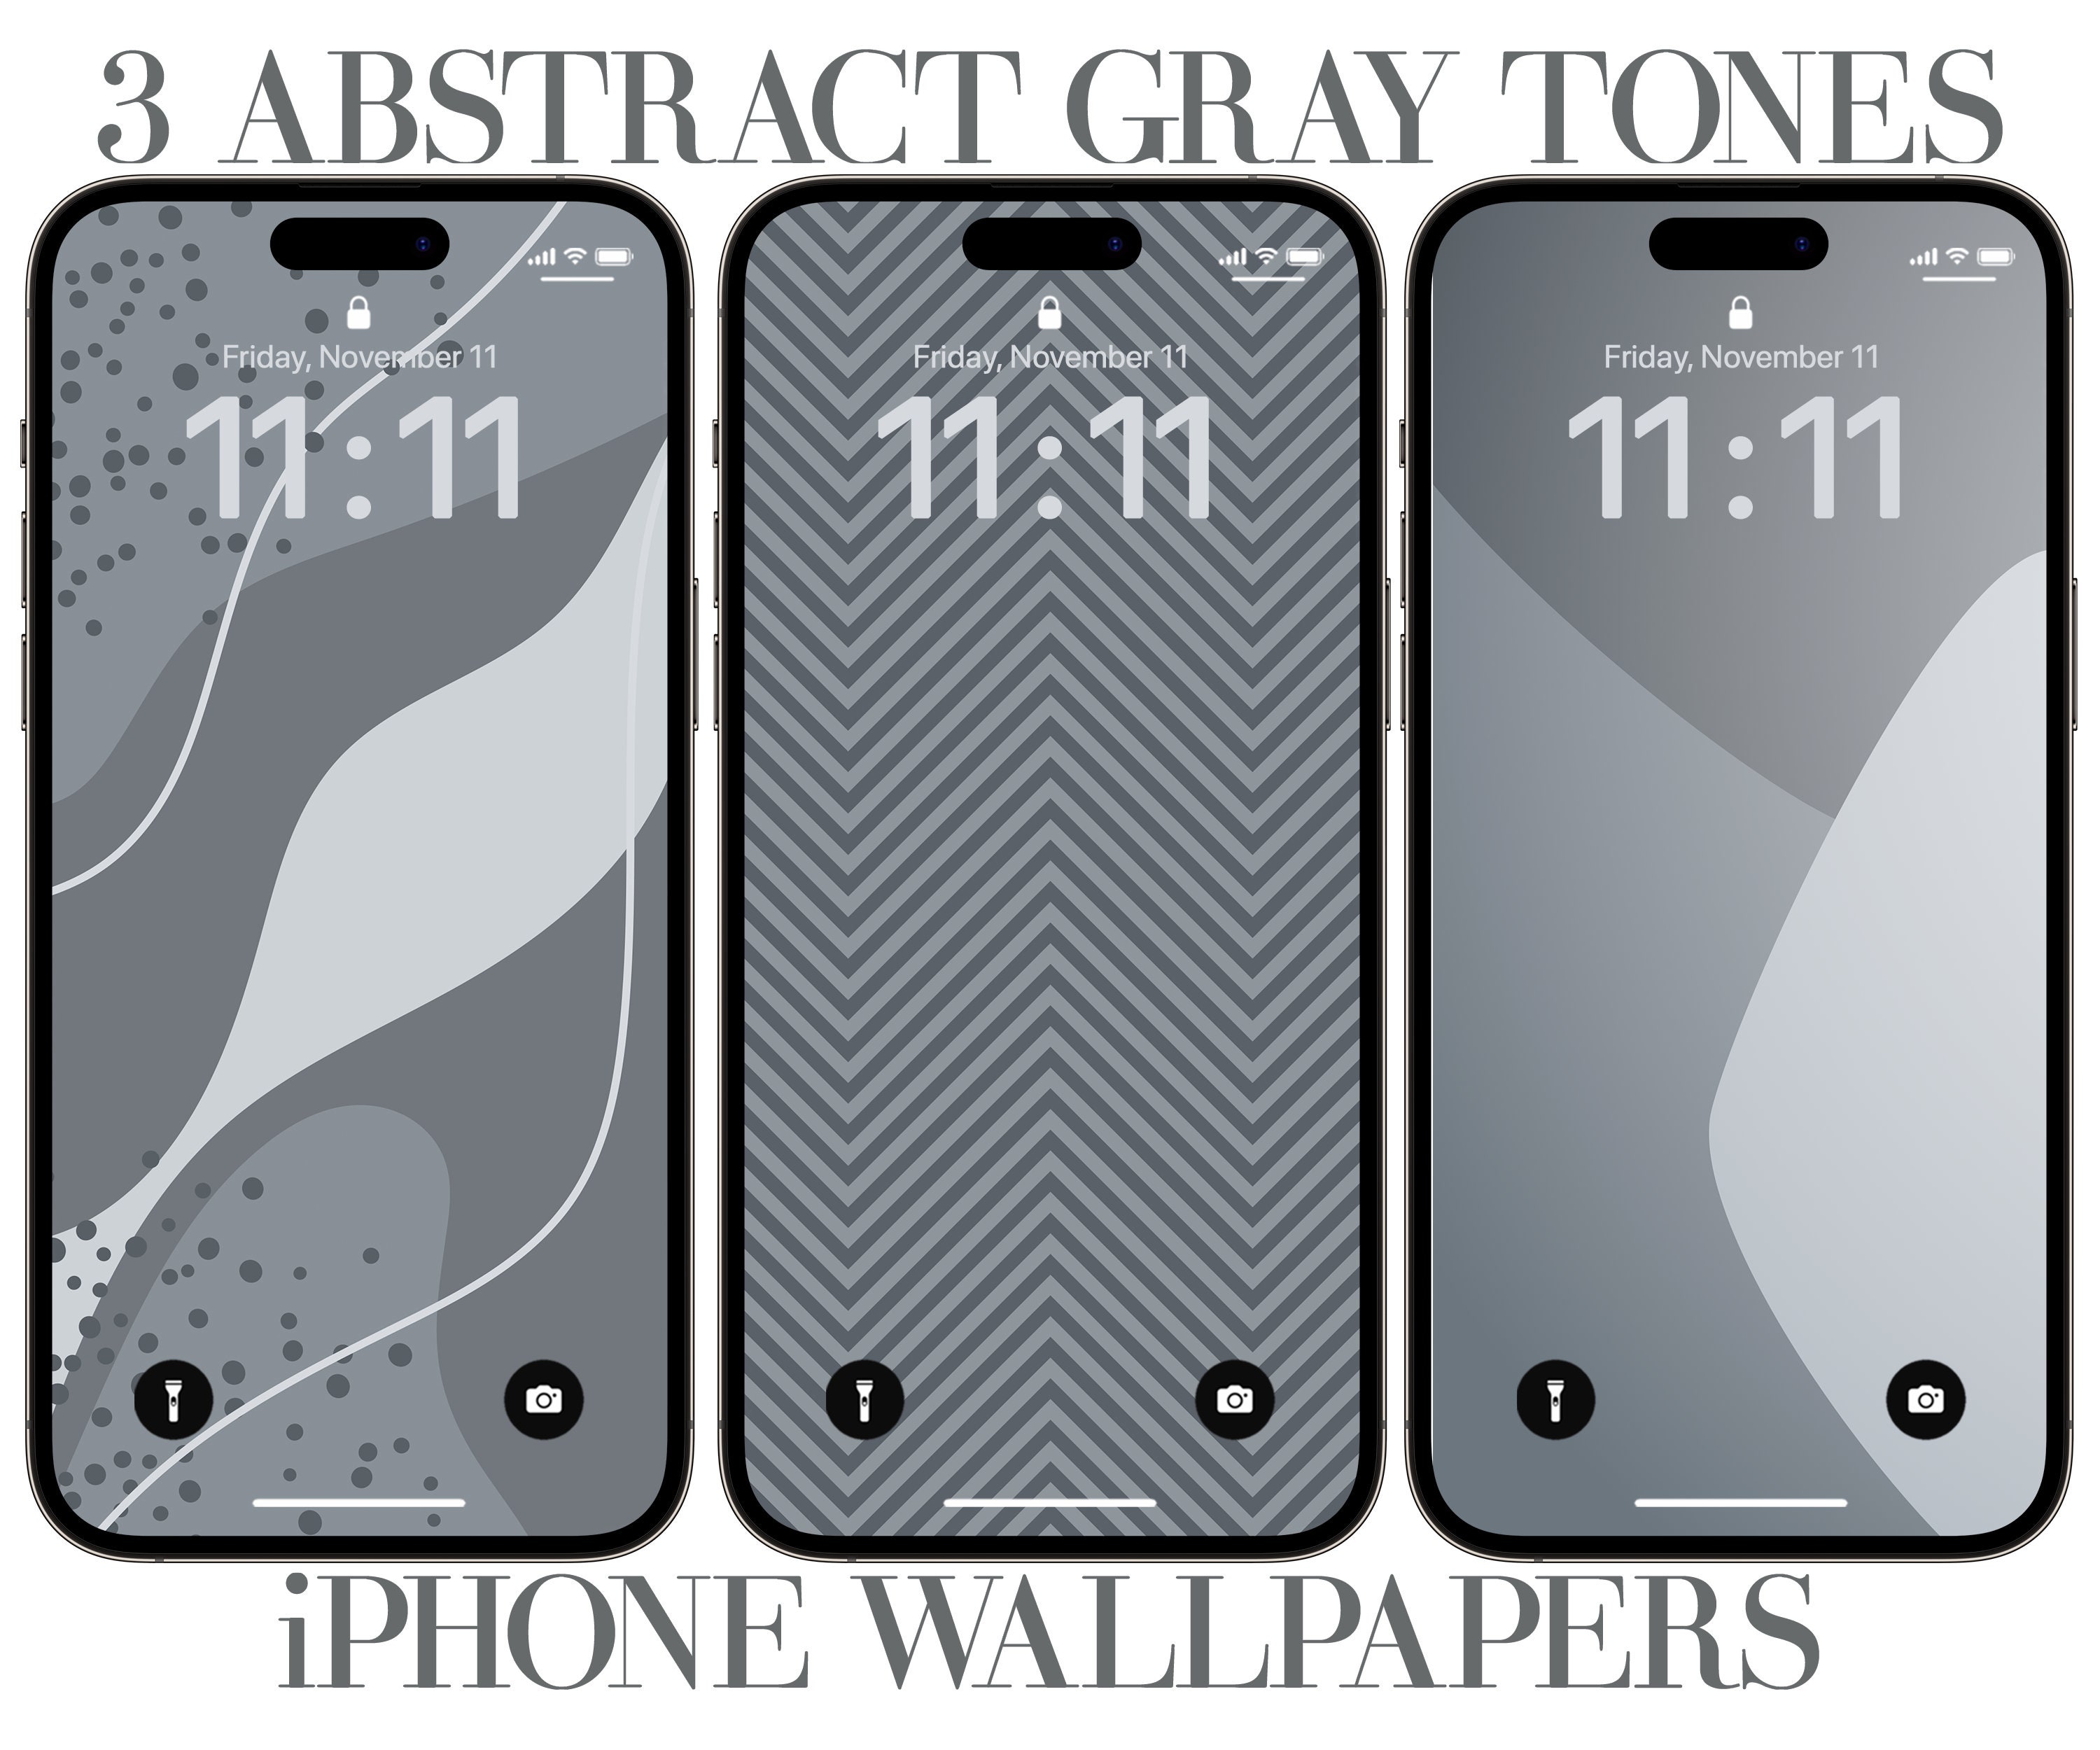 Blue Grey Wallpaper iPhone 6 Plus by DeviantSith17 on DeviantArt